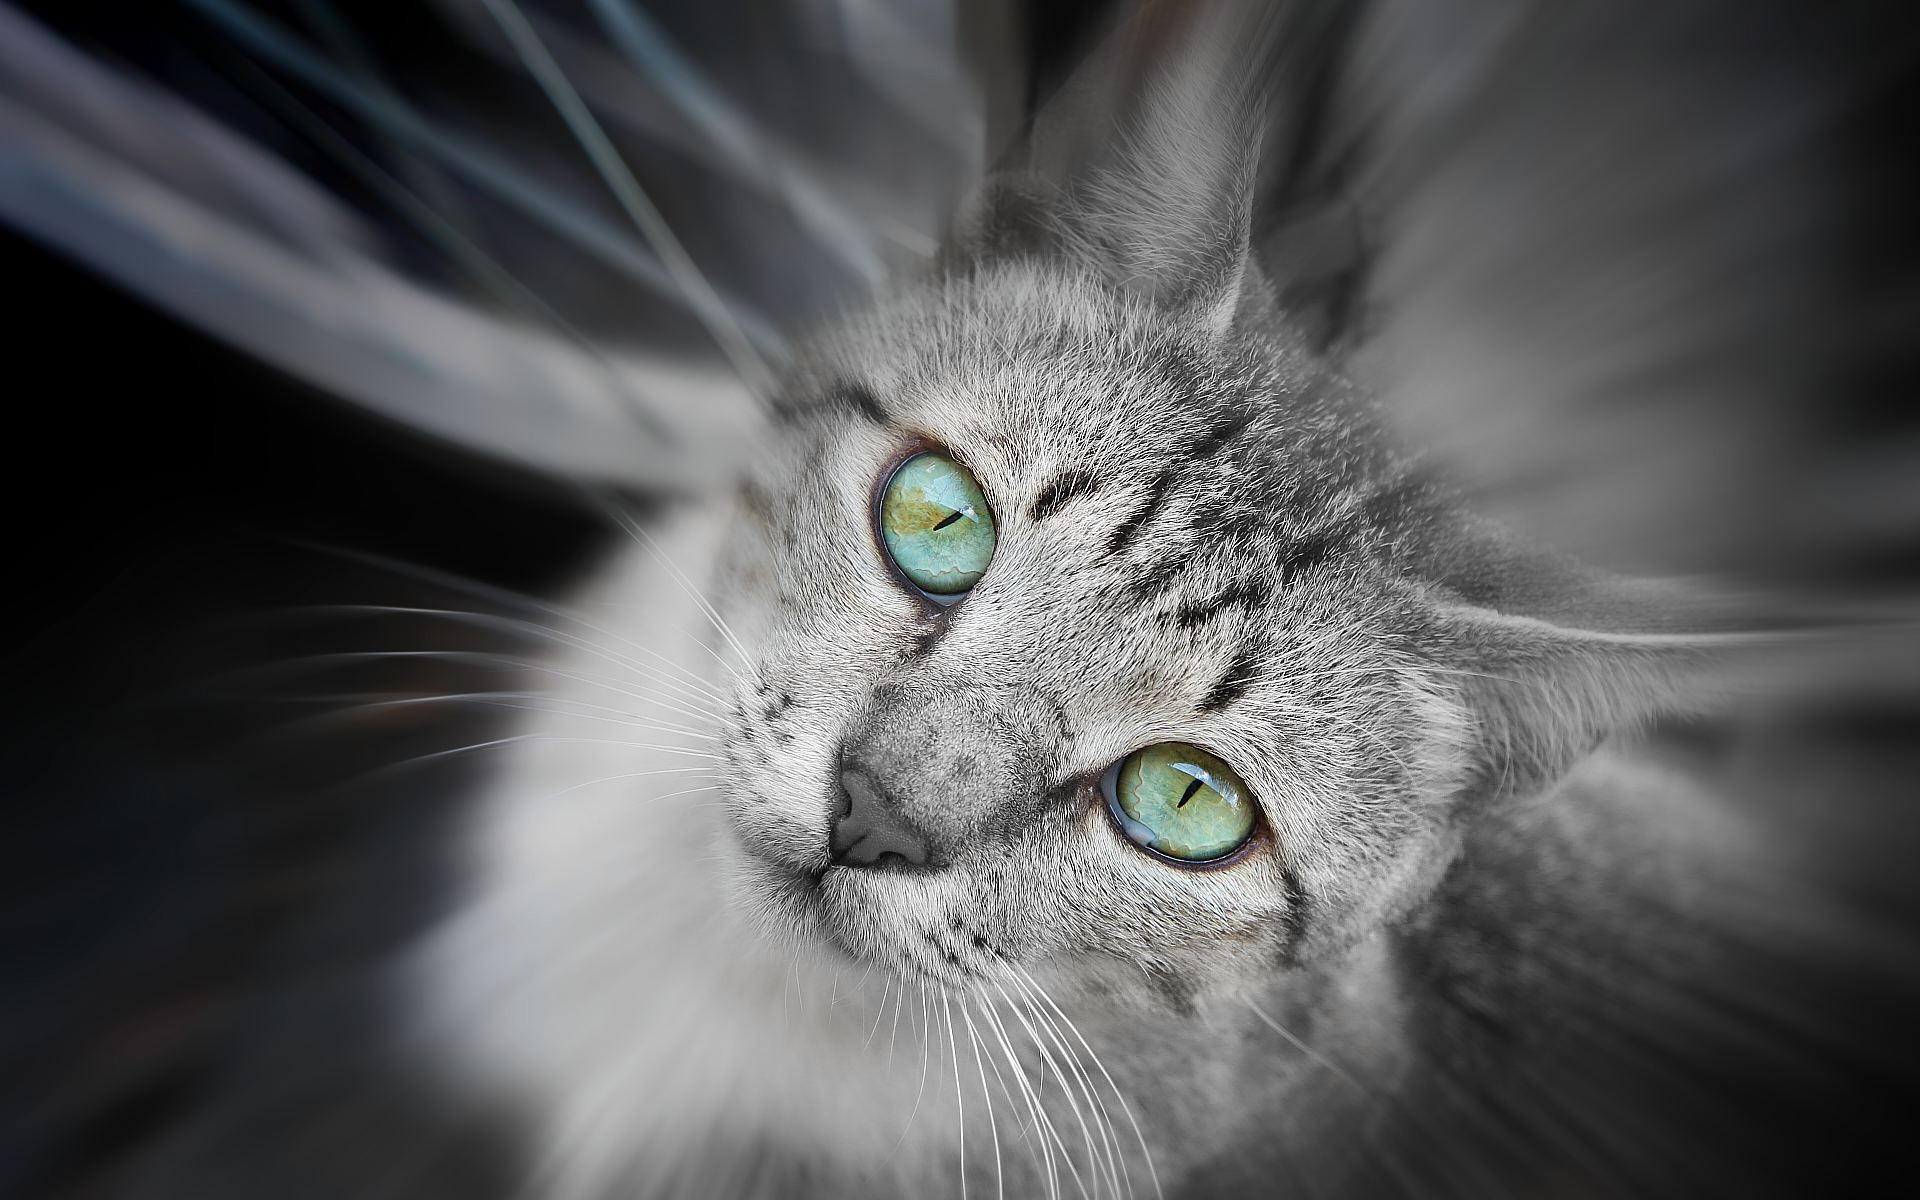 cats - desktop wallpaper